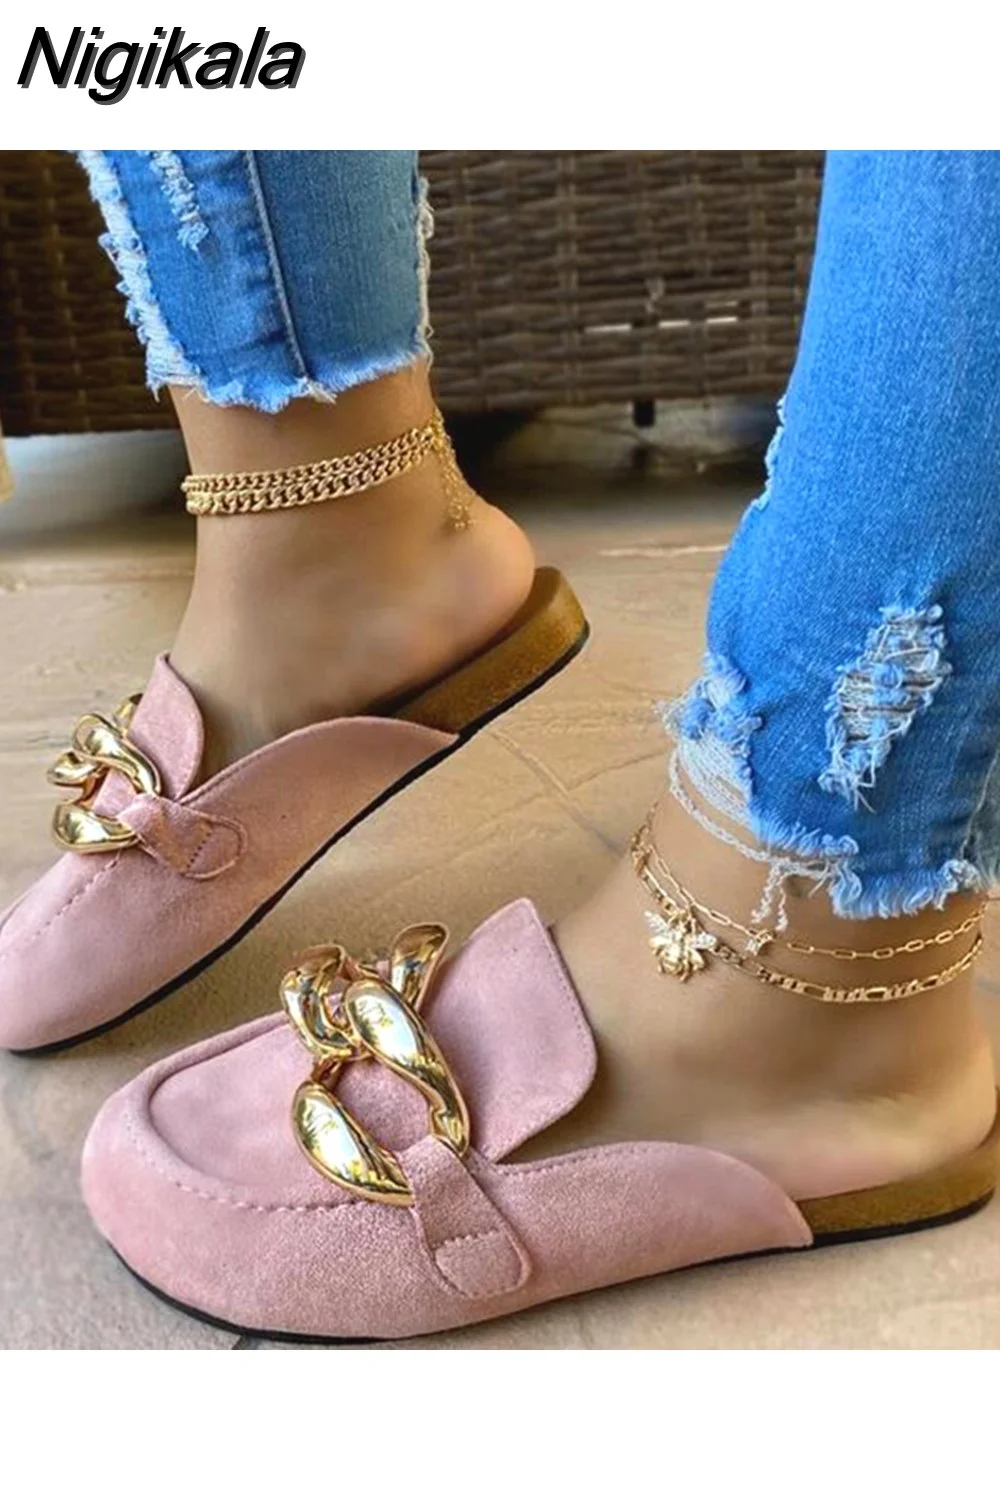 Nigikala Shoes Women Slippers Flats Designer Slides Size 43 White Black Luxury Big Chain Sandals Moda Feminina Verao 2023 Pantoufle 405-1